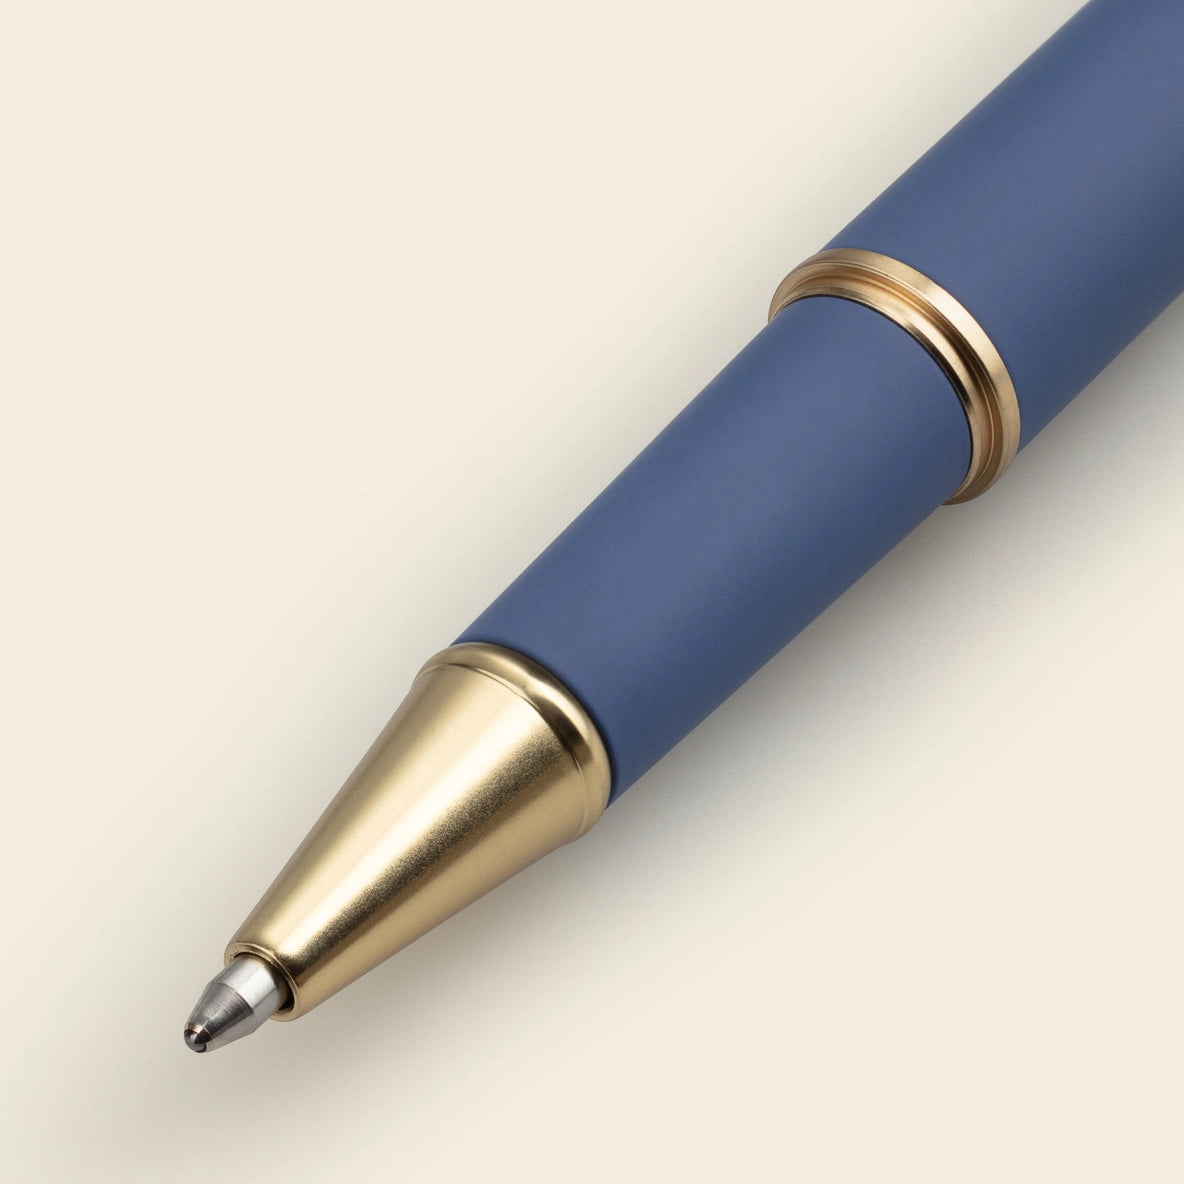 Mini Ballpoint Pen - Blue